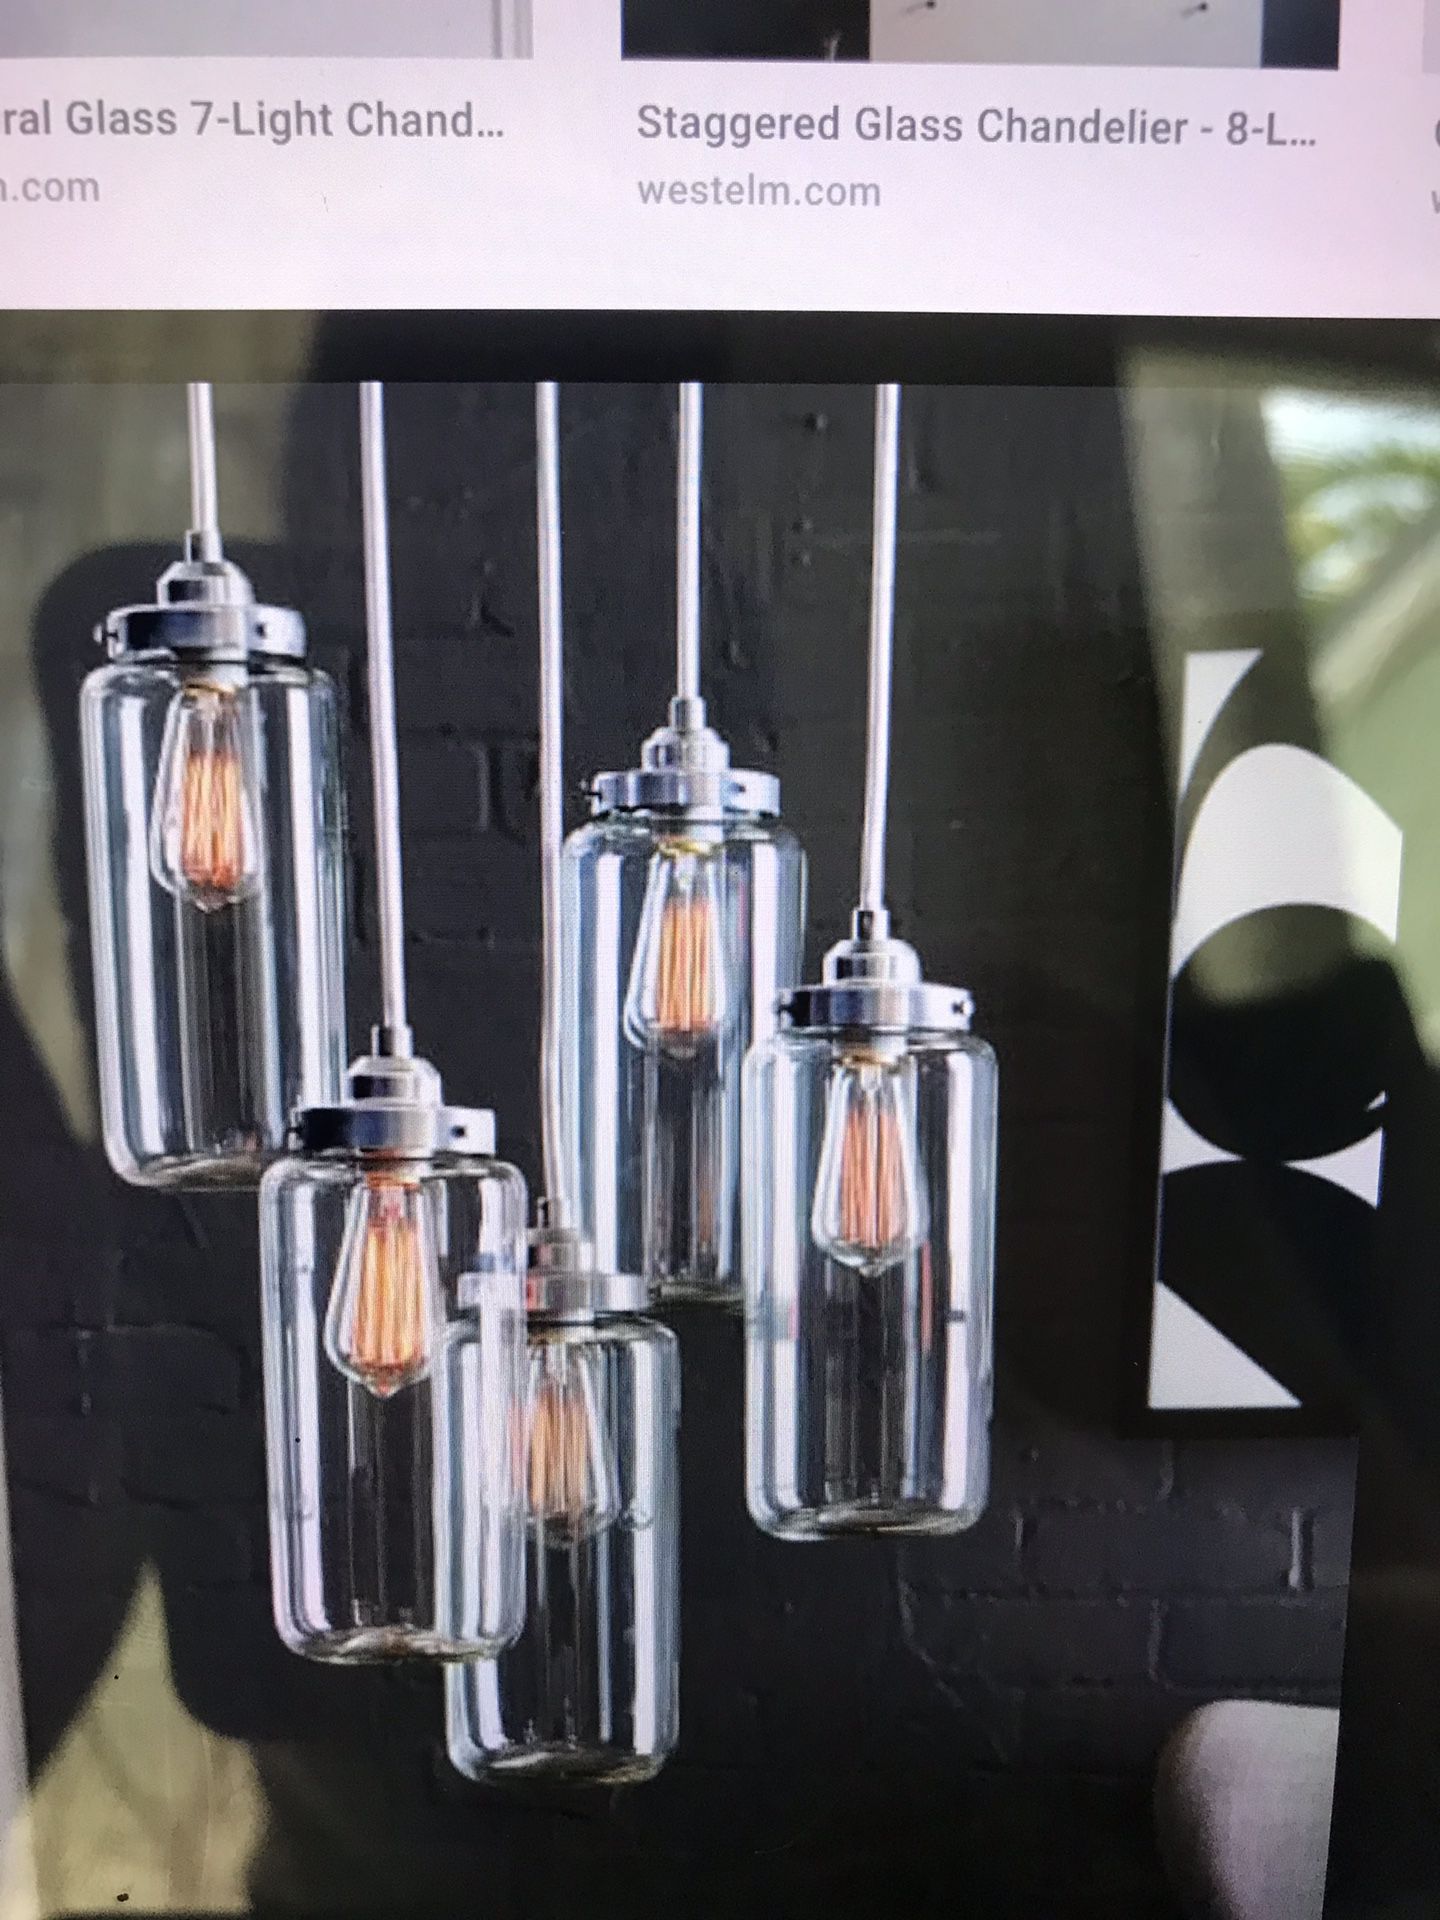 West elm 5 jar glass chandelier with Edison lightbulbs